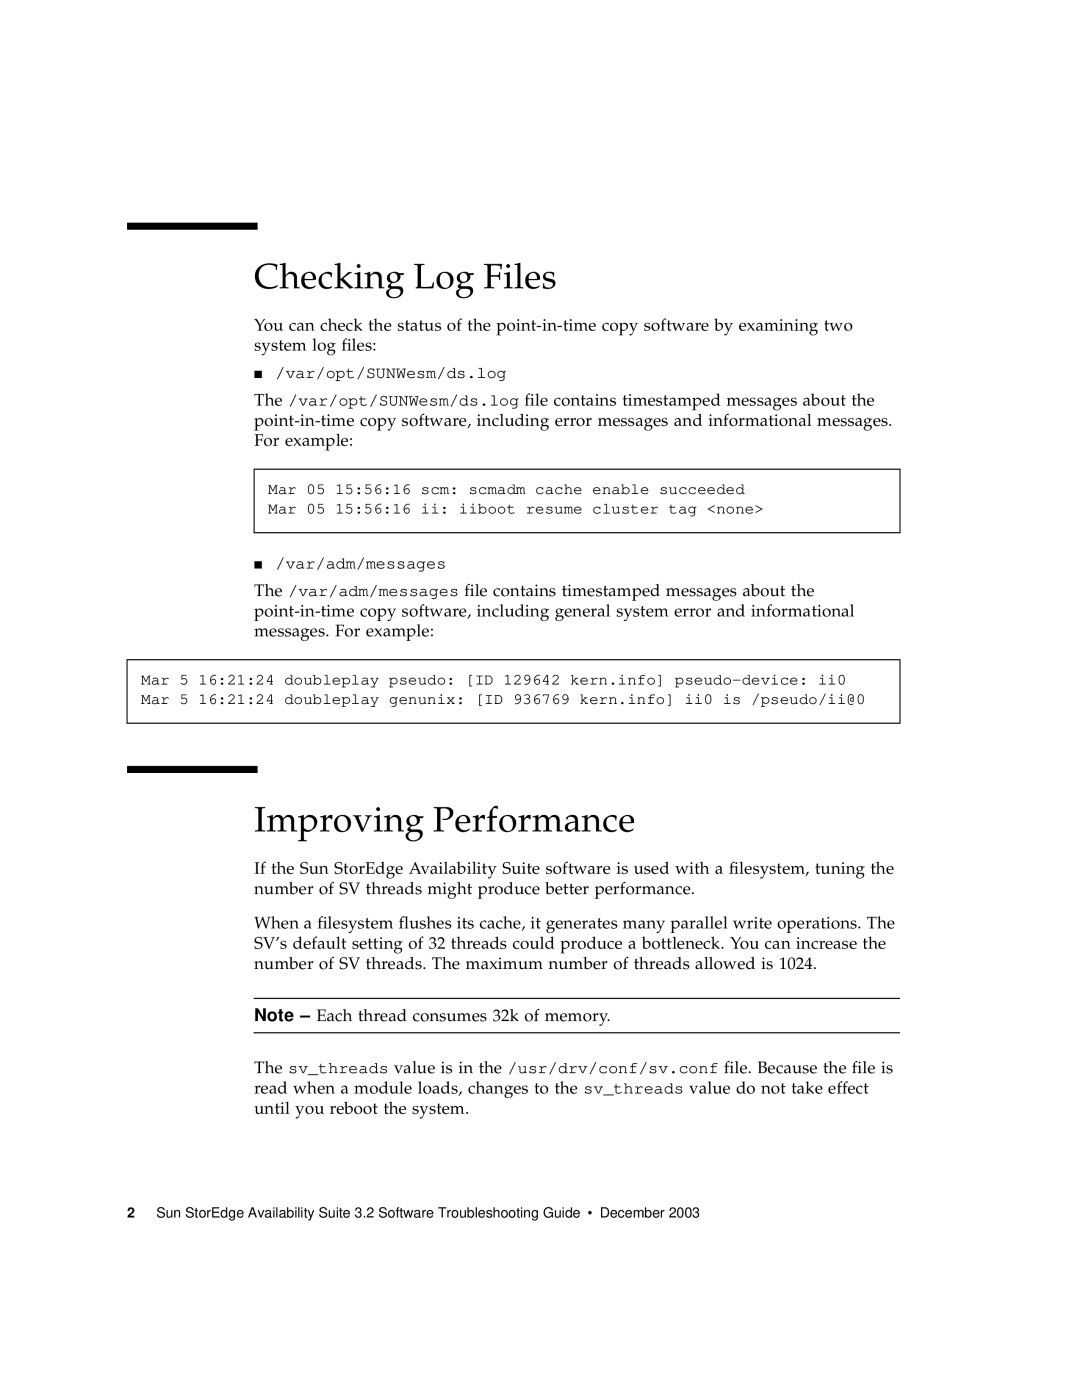 Sun Microsystems 3.2 manual Checking Log Files, Improving Performance 